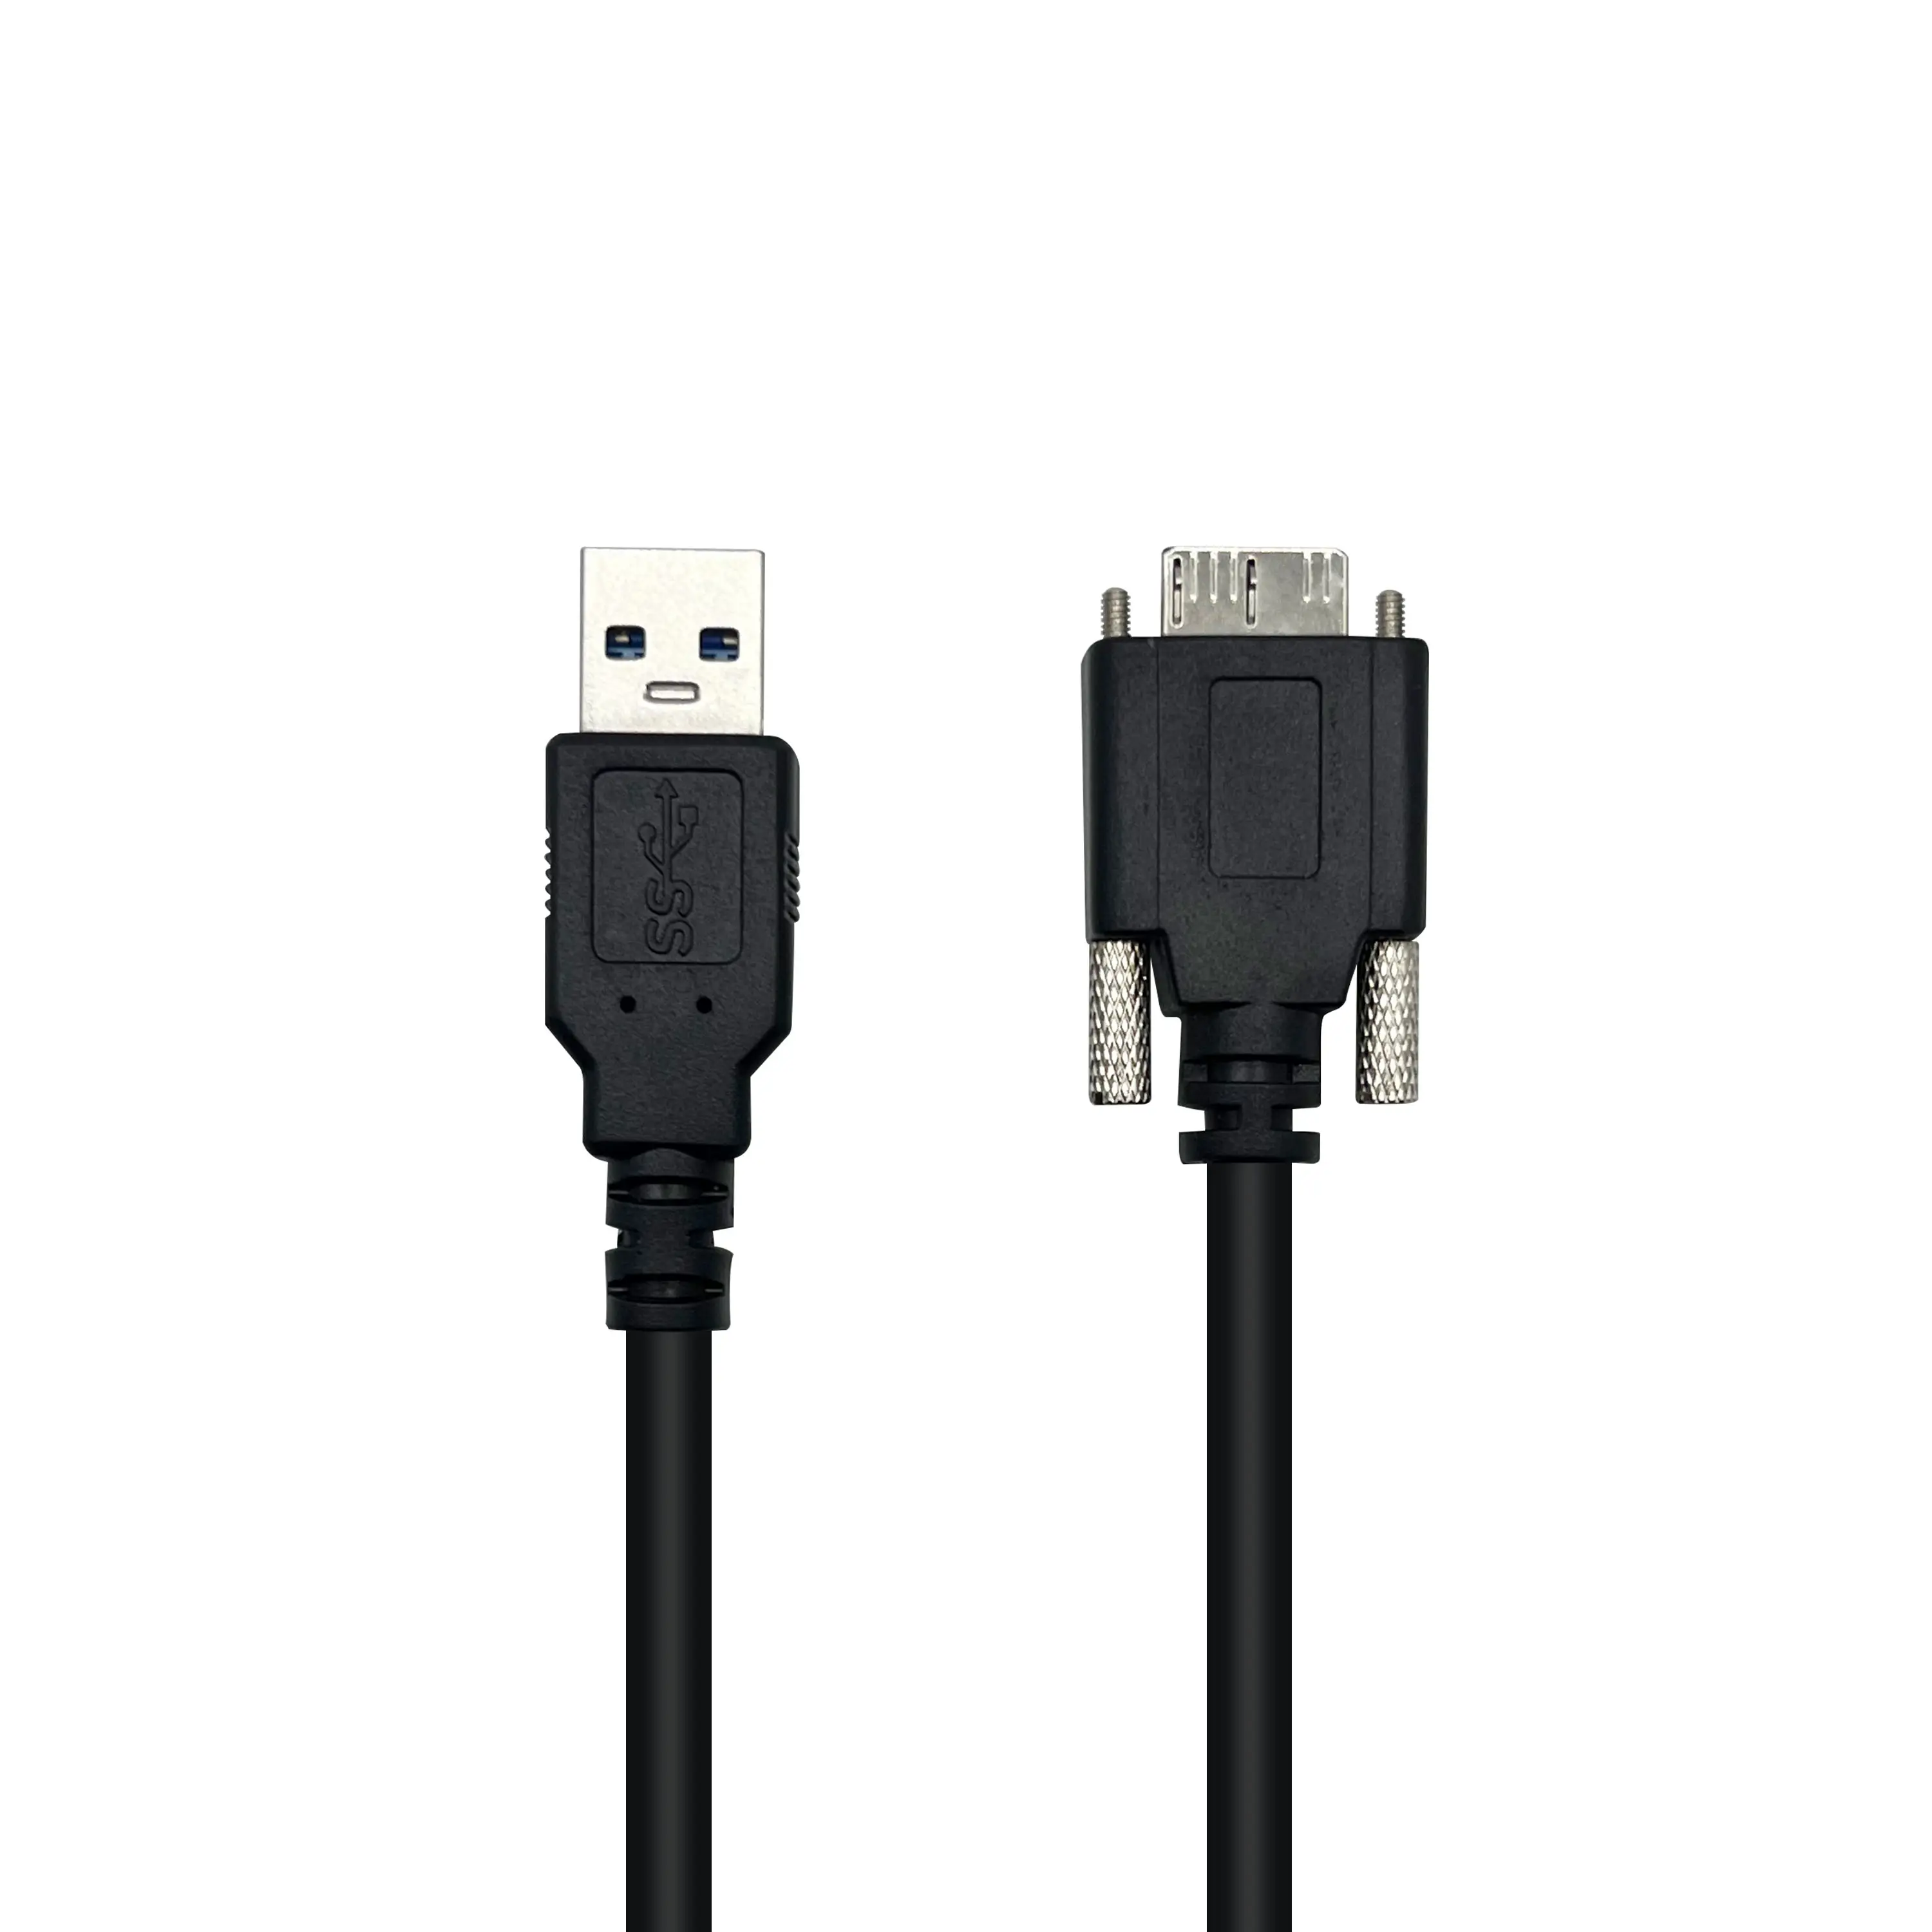 USB 3.0กับ Micro B พร้อมสาย thumbscrews USB3สายวิสัยทัศน์